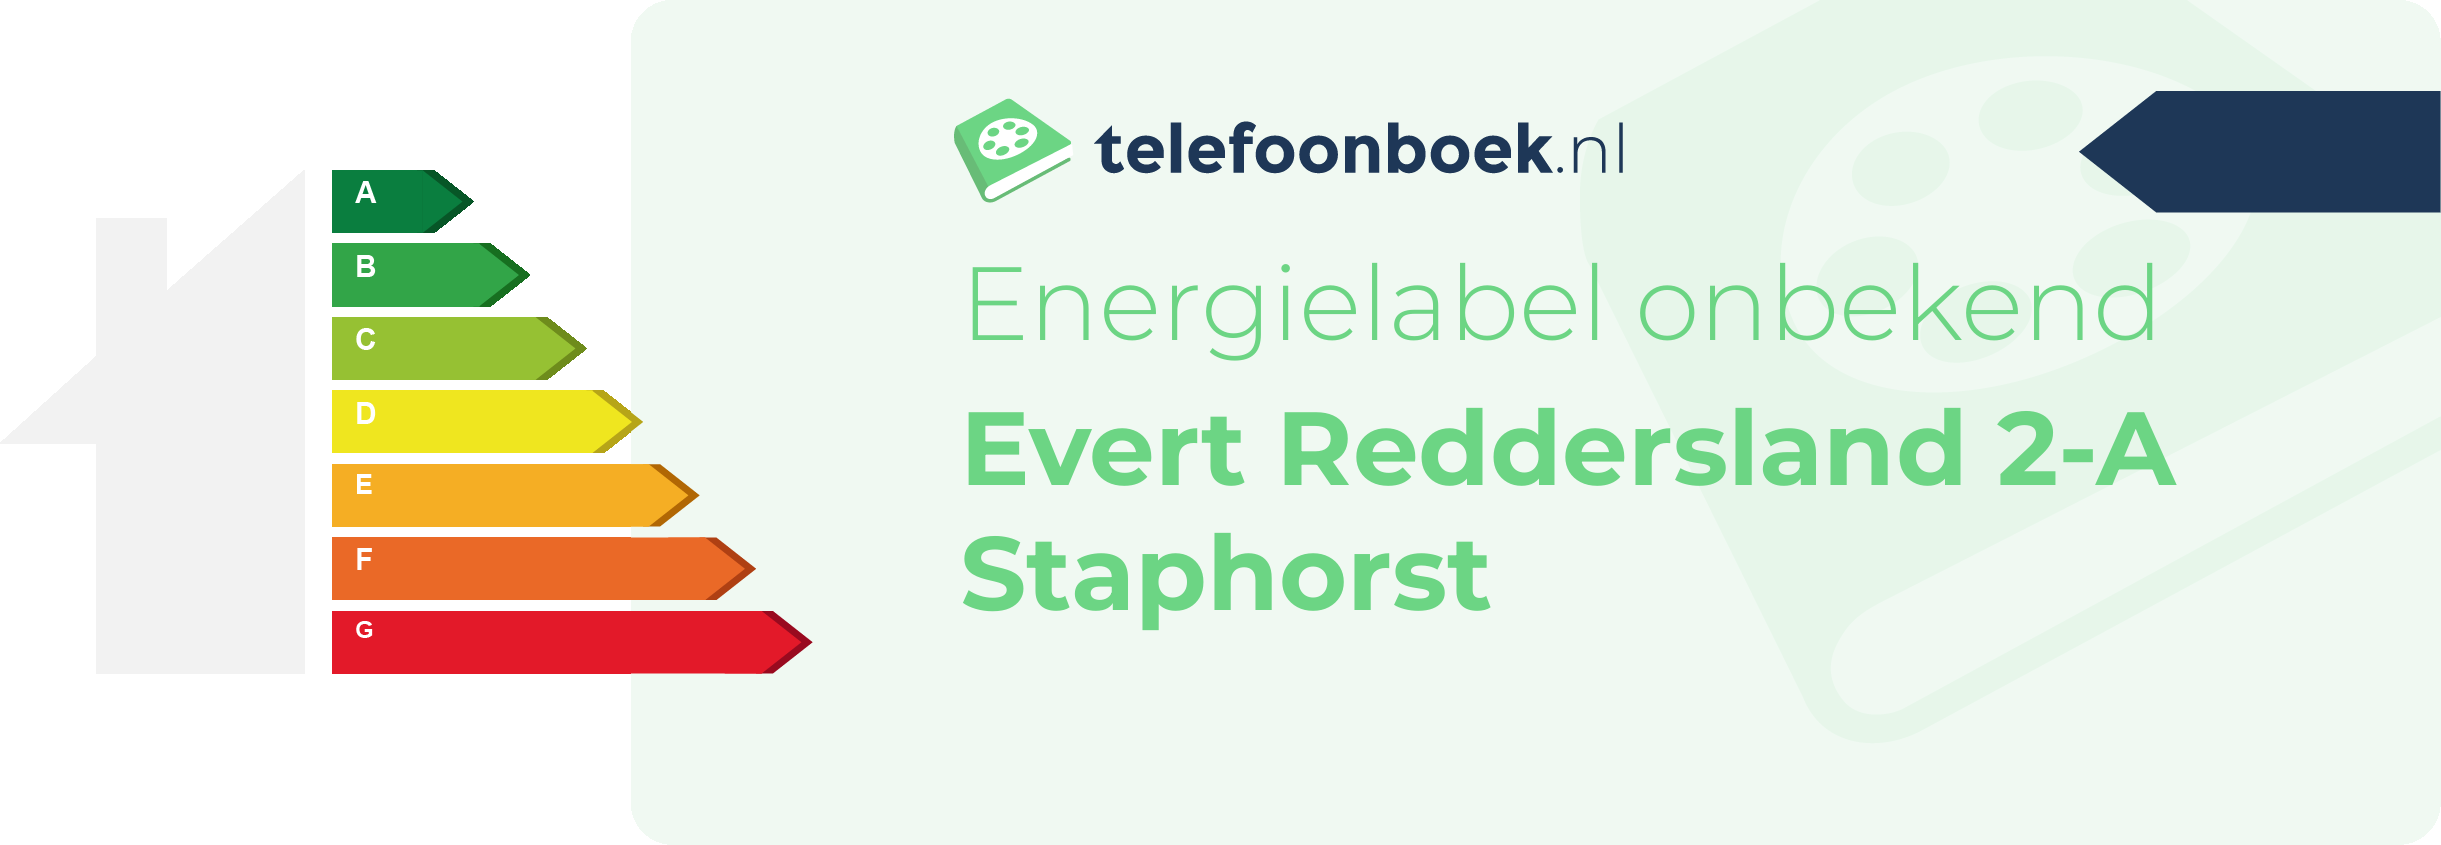 Energielabel Evert Reddersland 2-A Staphorst